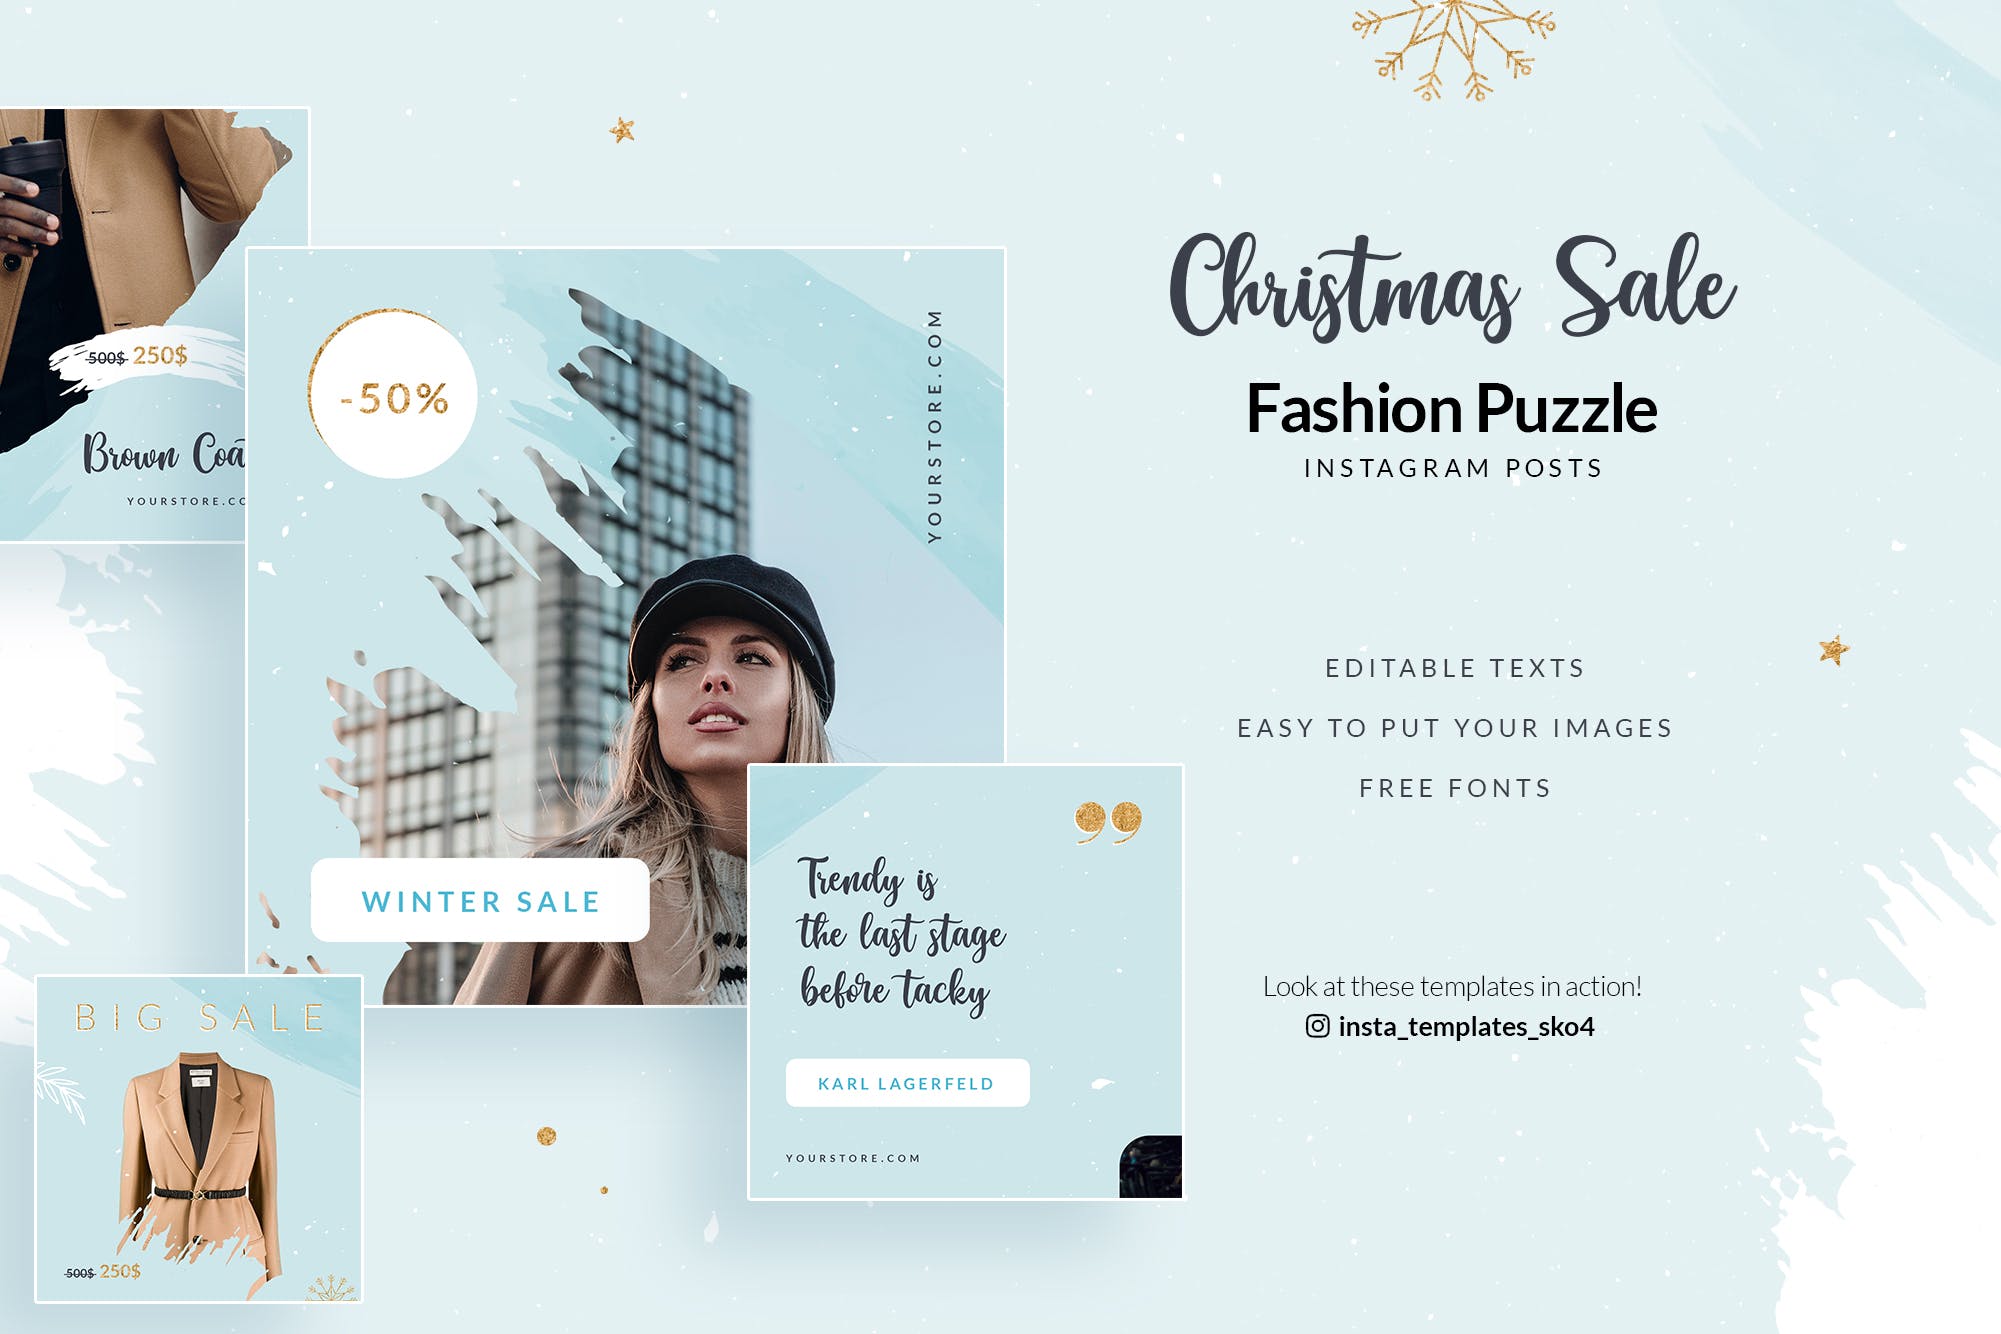 圣诞节时尚促销广告Instagram拼图风格设计模板蚂蚁素材精选 Christmas Fashion Sale – Instagram Puzzle插图(2)